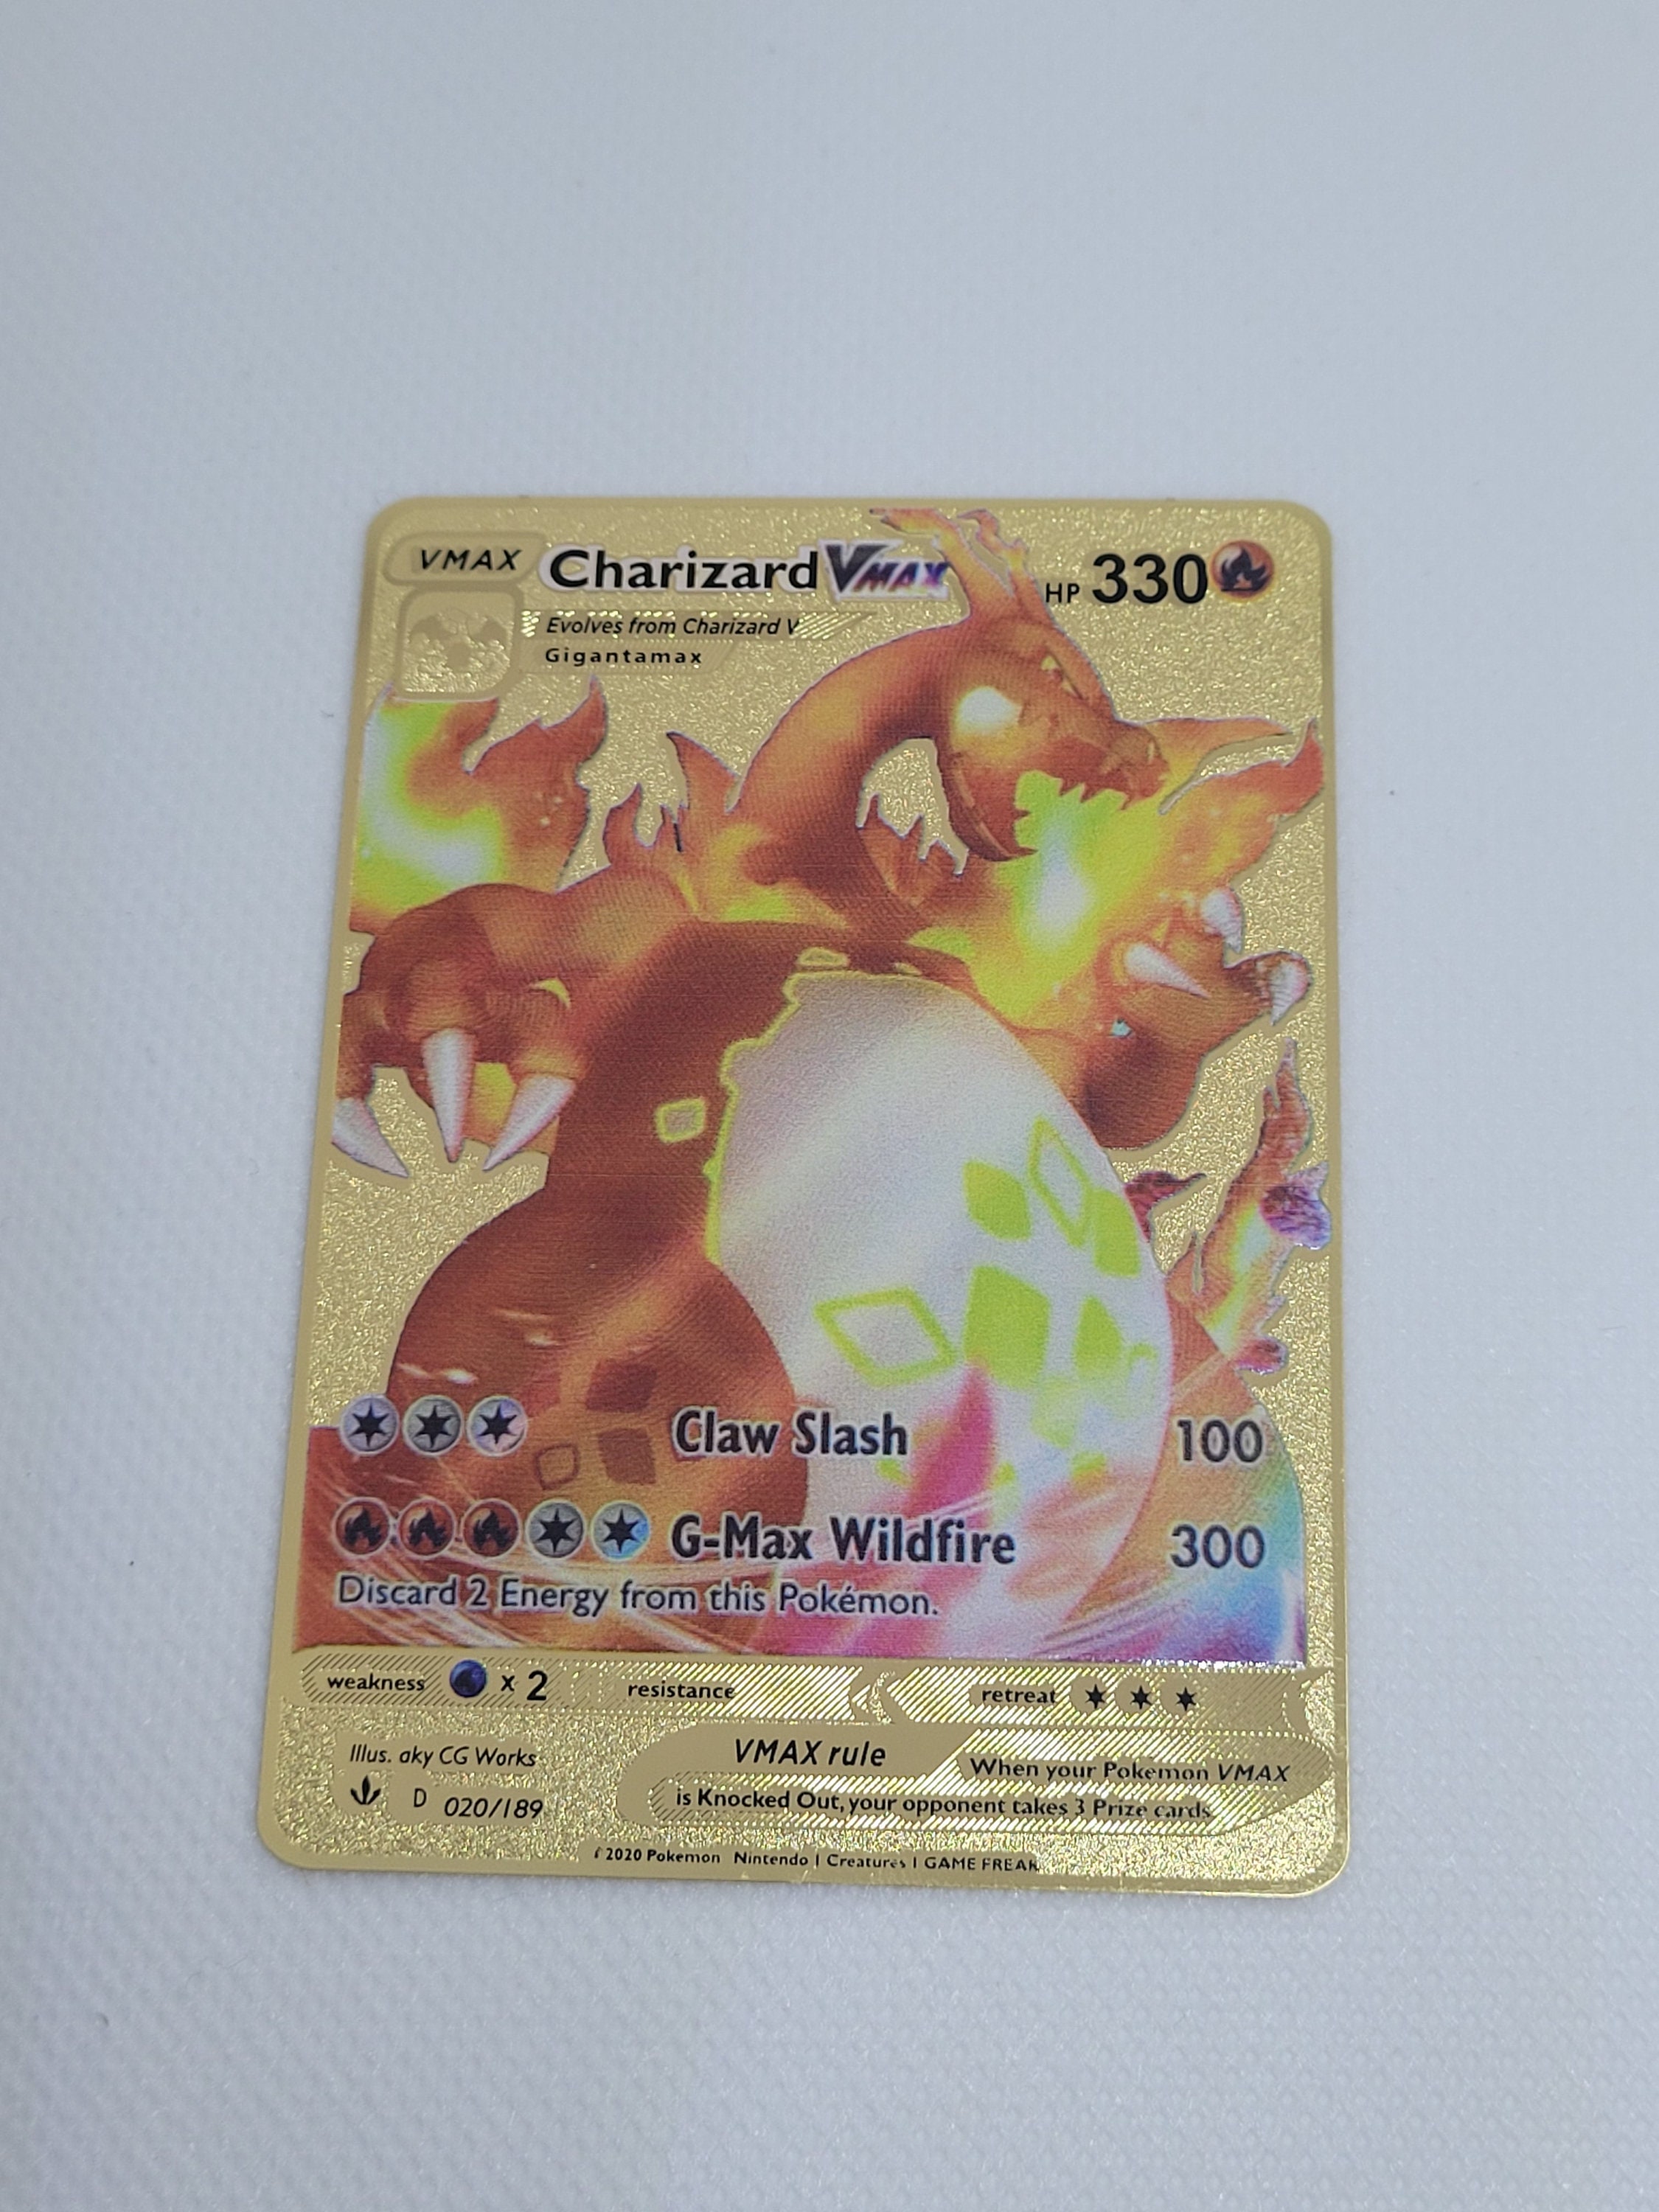 Charizard VMAX Shiny Gold Metal Pokemon Card -  Denmark